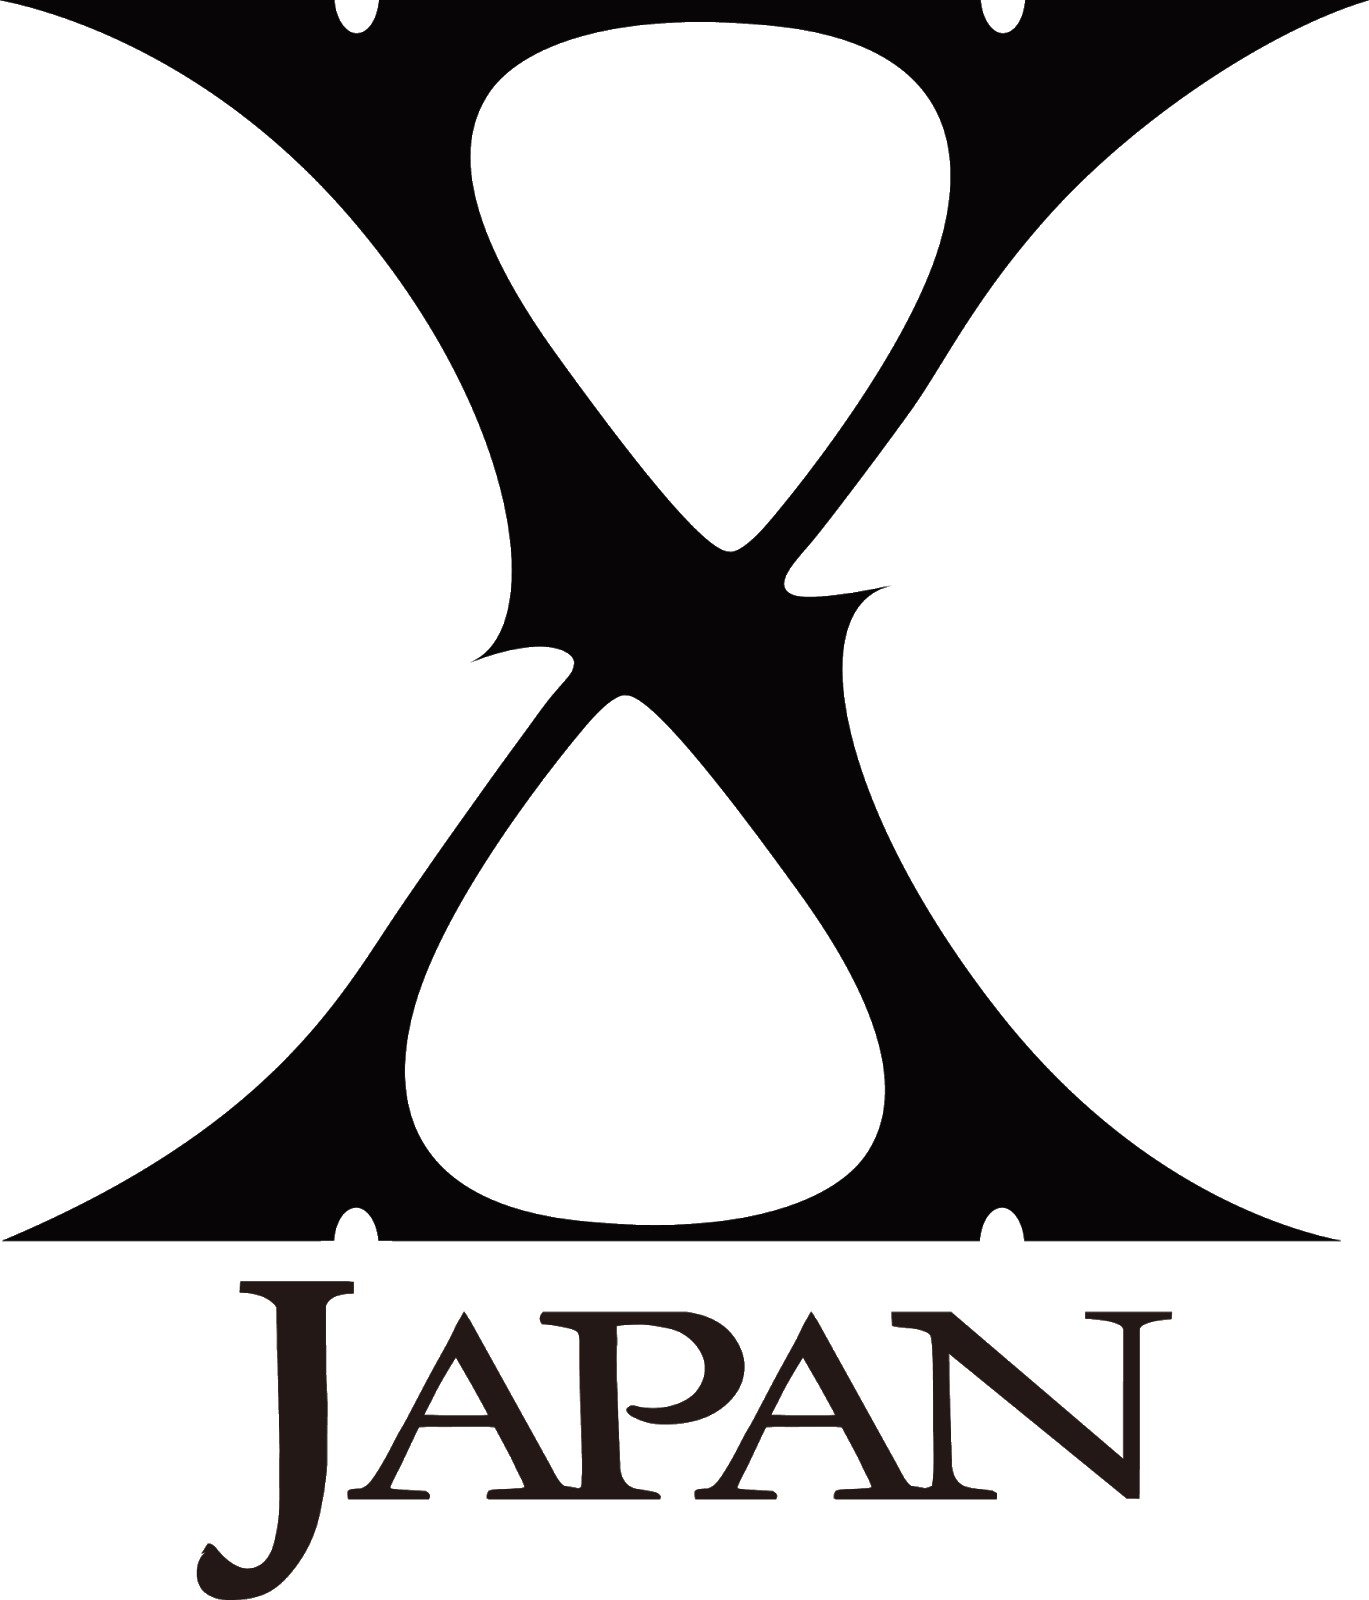 Logodol 全てが高画質 背景透過なアーティストのロゴをお届けするブログ 完成された X Japan の背景透過ロゴとファンアート